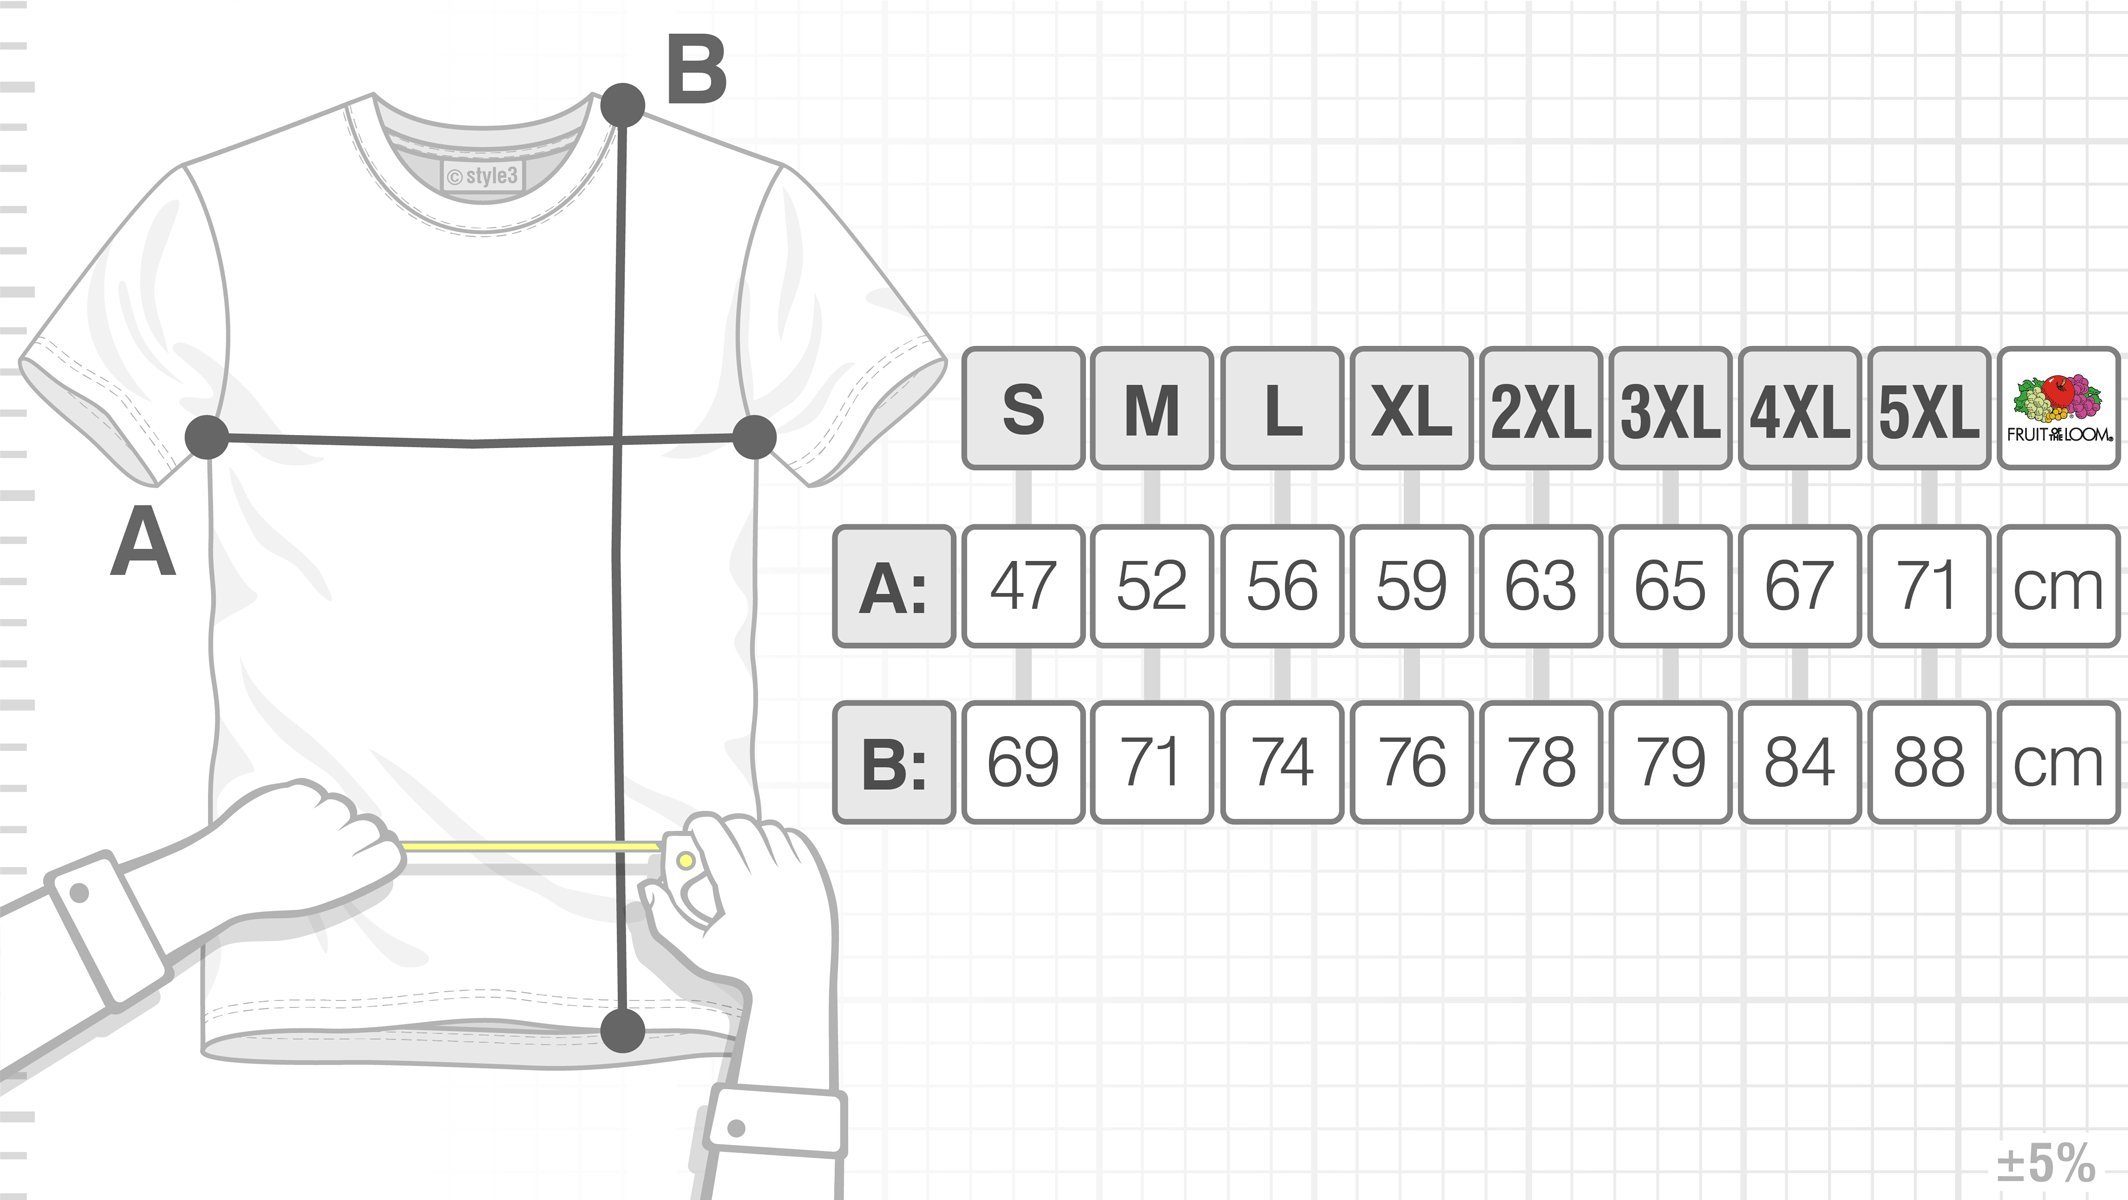 style3 Print-Shirt Herren T-Shirt 16-Bit Sweater Ugly x-mas weihnachtsbaum pulli